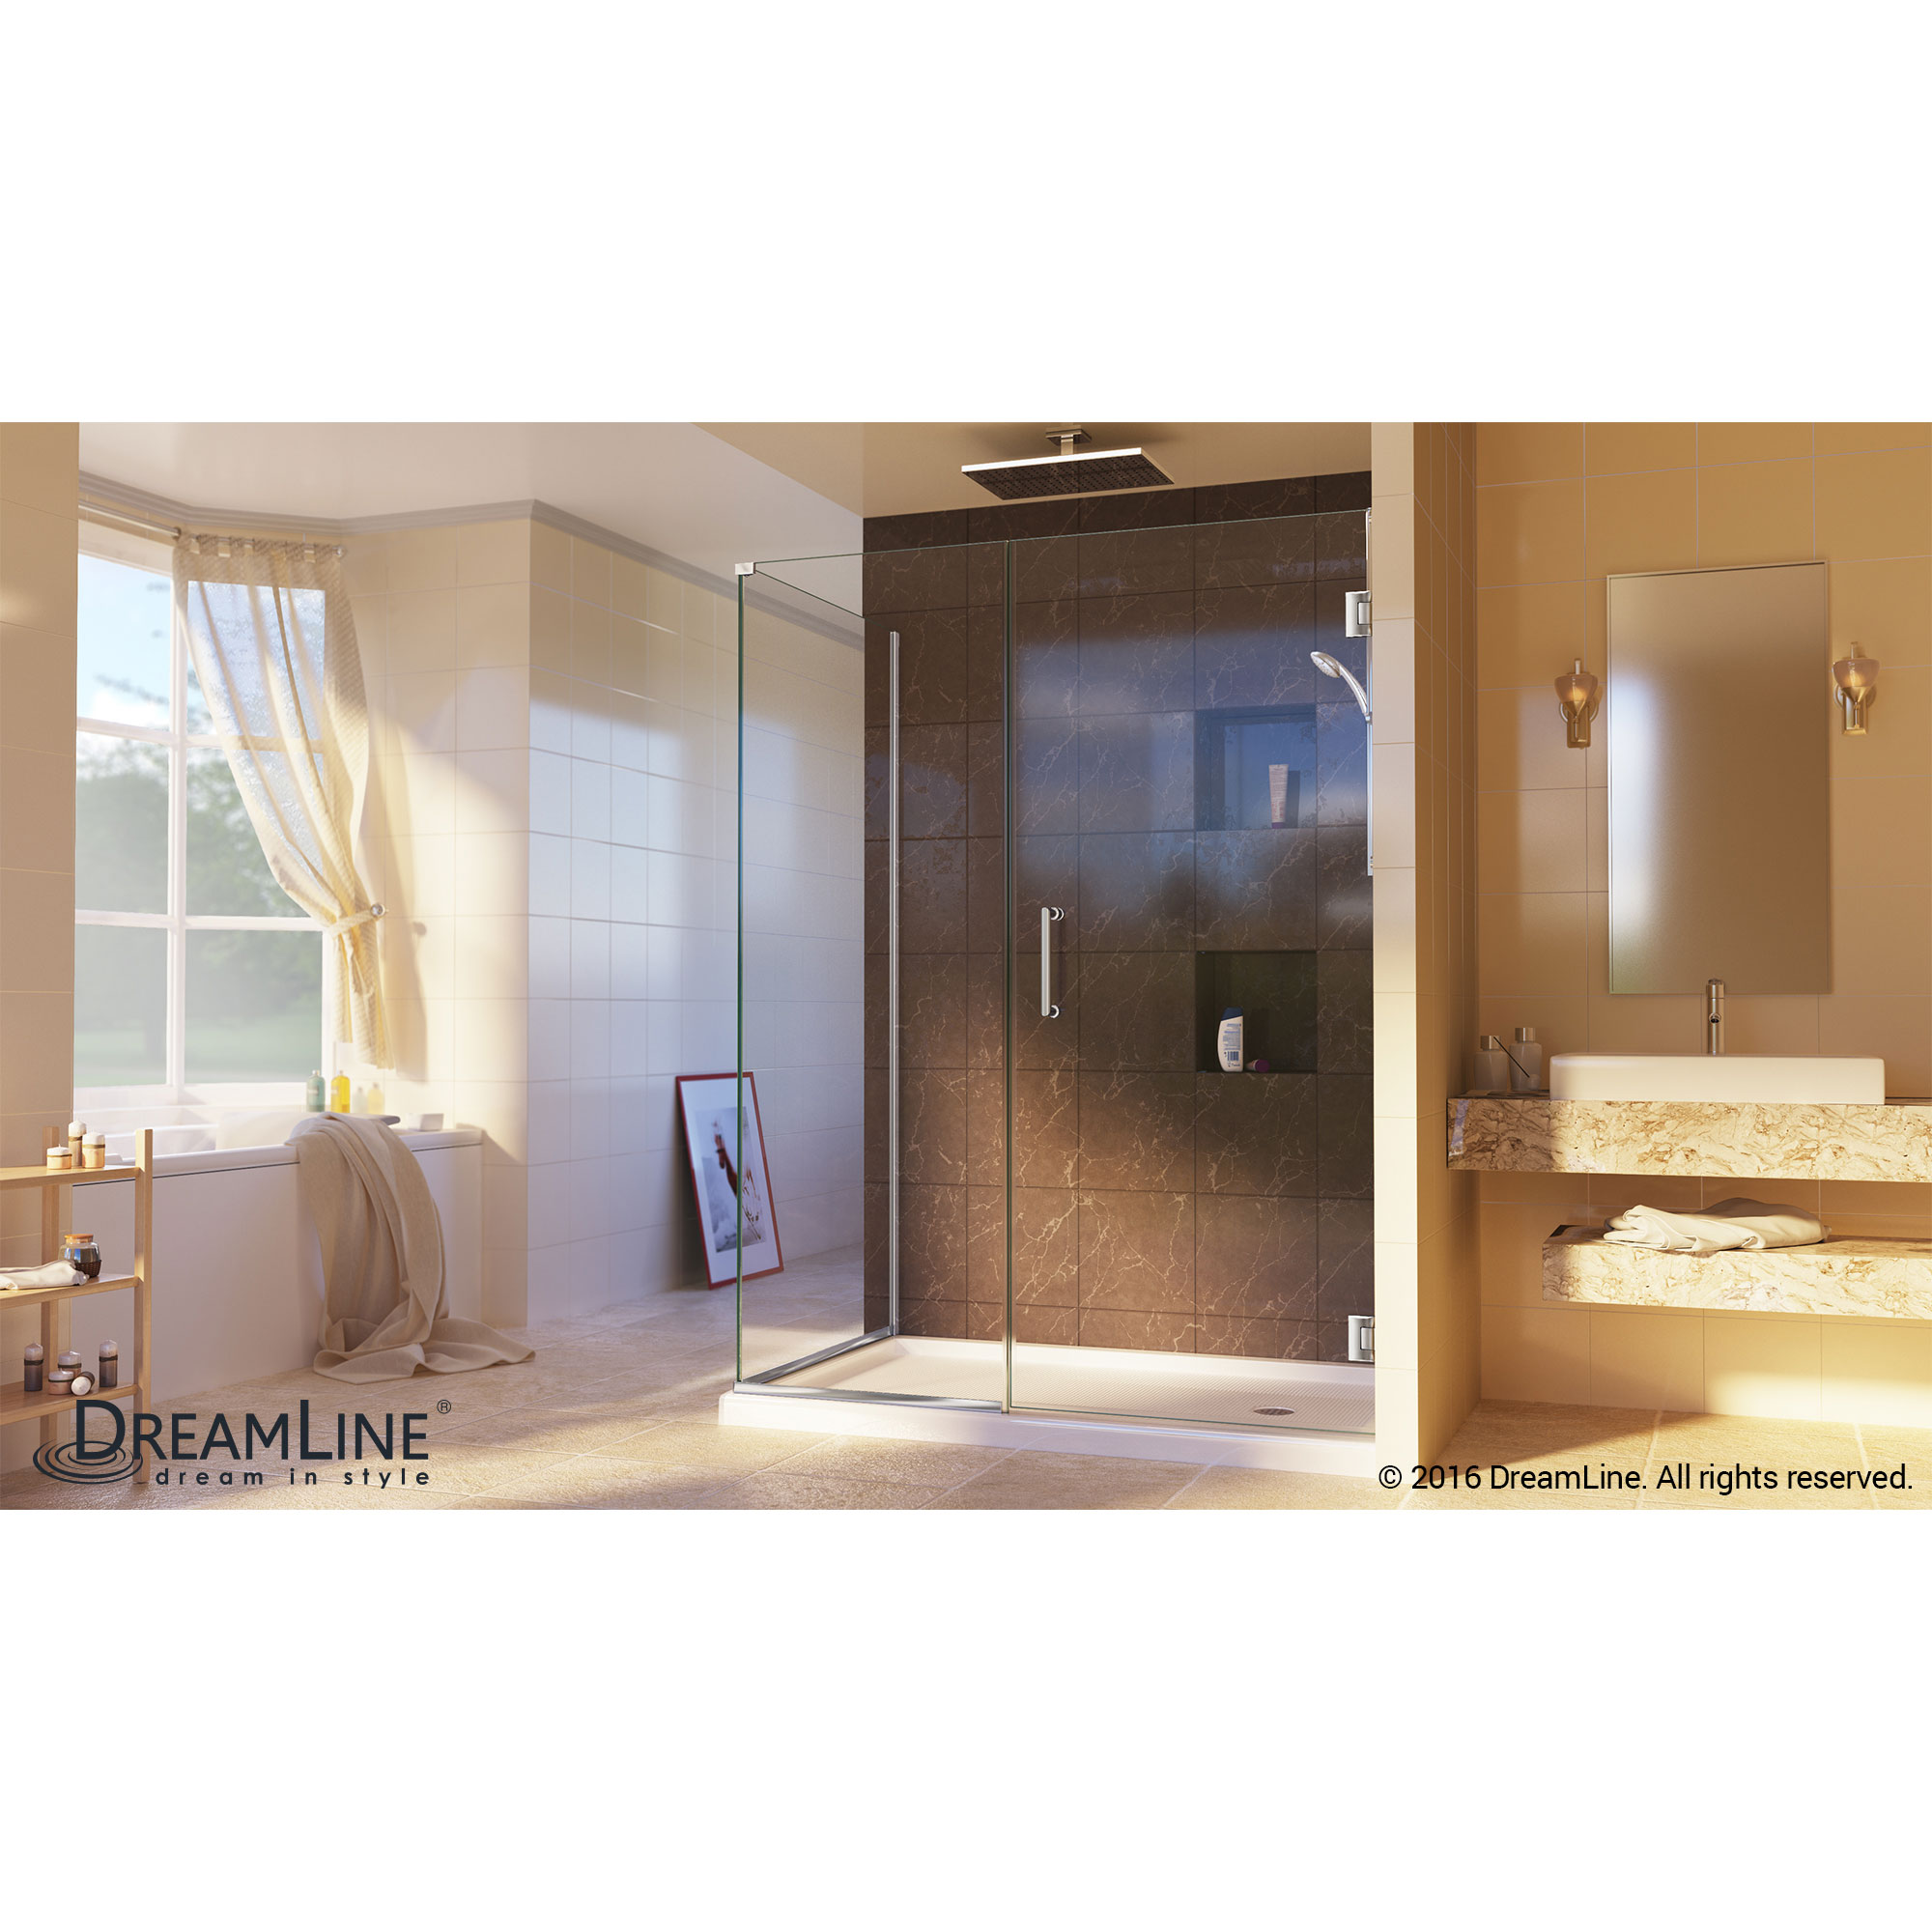 DreamLine SHEN-24475300-01 Unidoor Plus Hinged Shower Enclosure In Chrome Finish Hardware